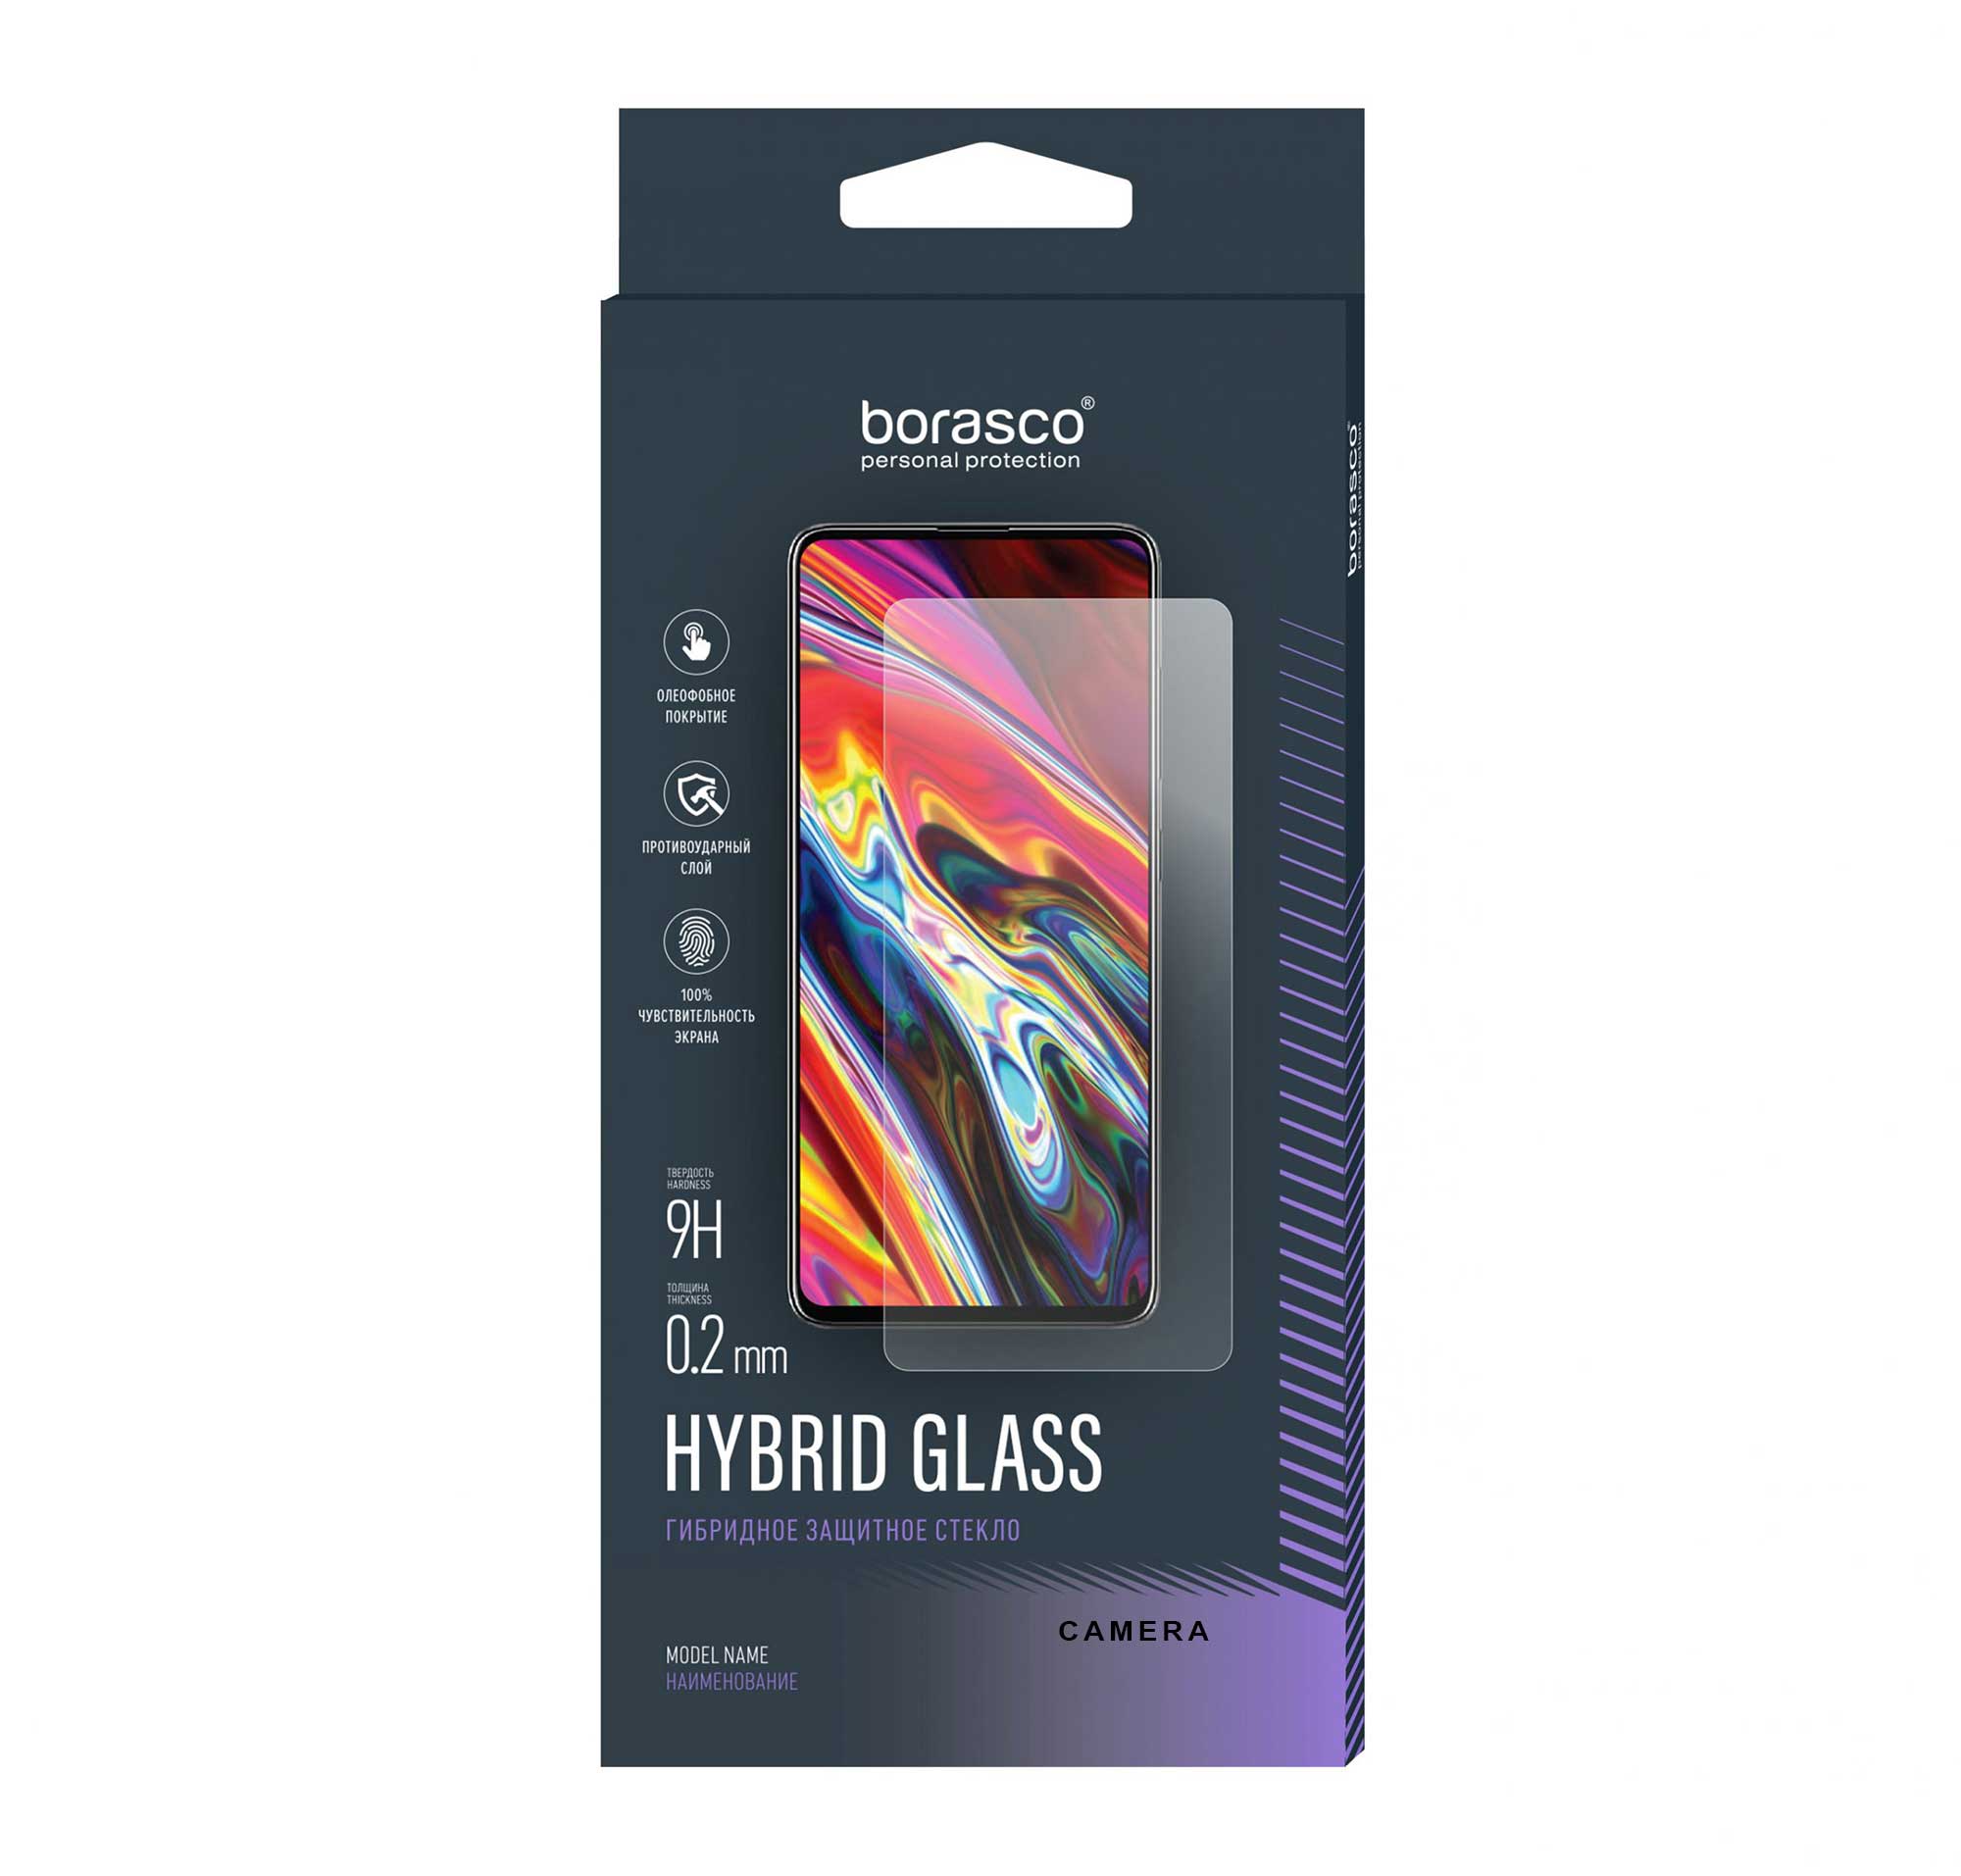 Защитное стекло (Экран+Камера) BoraSCO Hybrid Glass для Vivo V21e защитное стекло для vivo y12s y17 y12a y15a y15s y20i y20s y33s y72 y52 y91c v21e